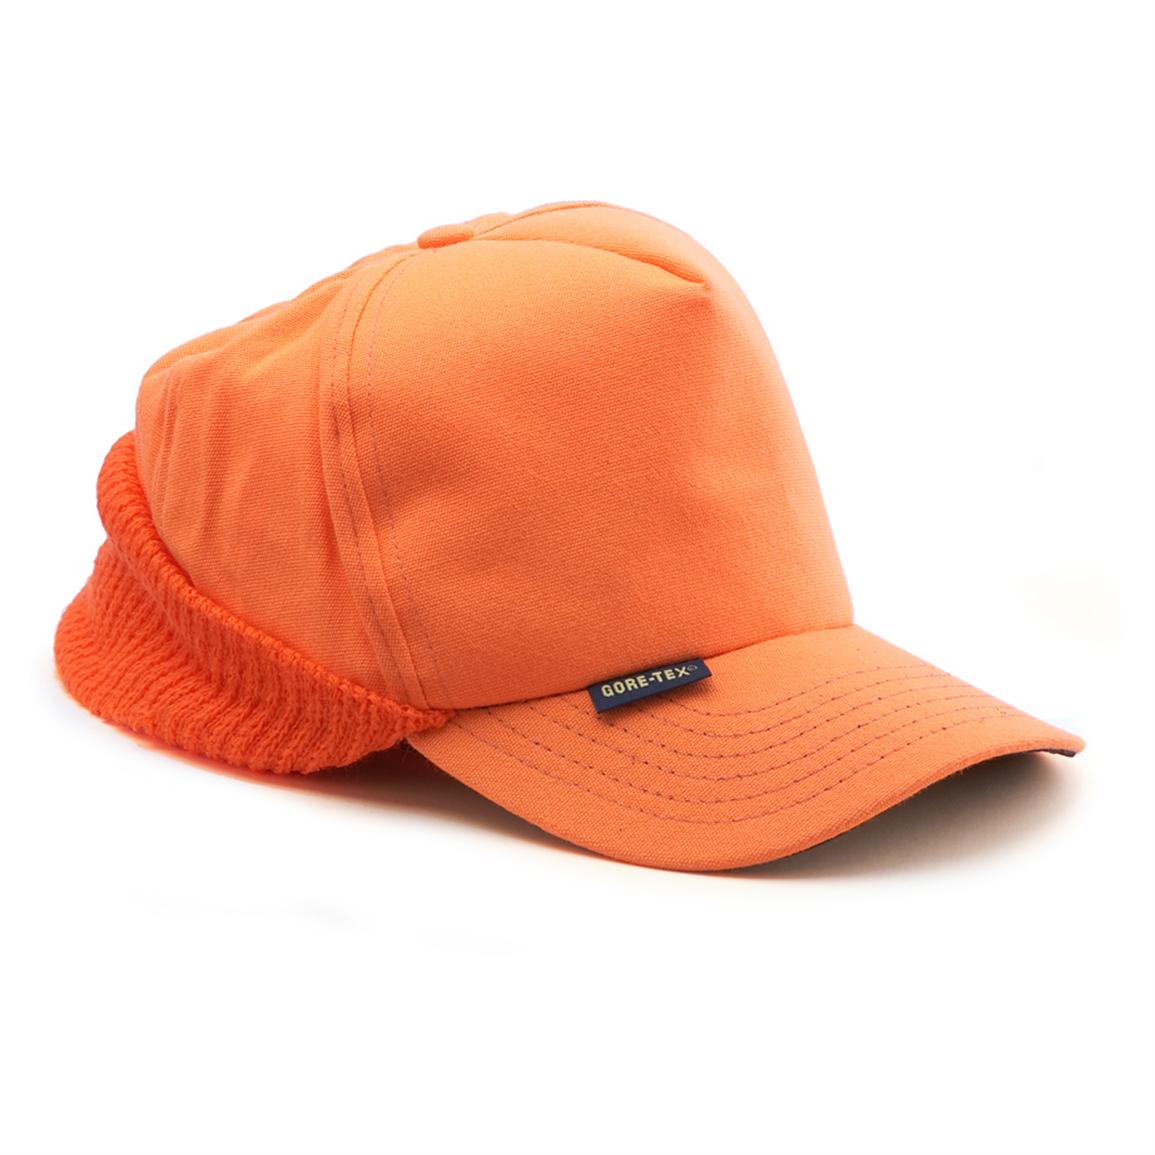 Remington Hunter Safety Blaze Orange Cap Low Crown Adjustable Hat Hunting F4 